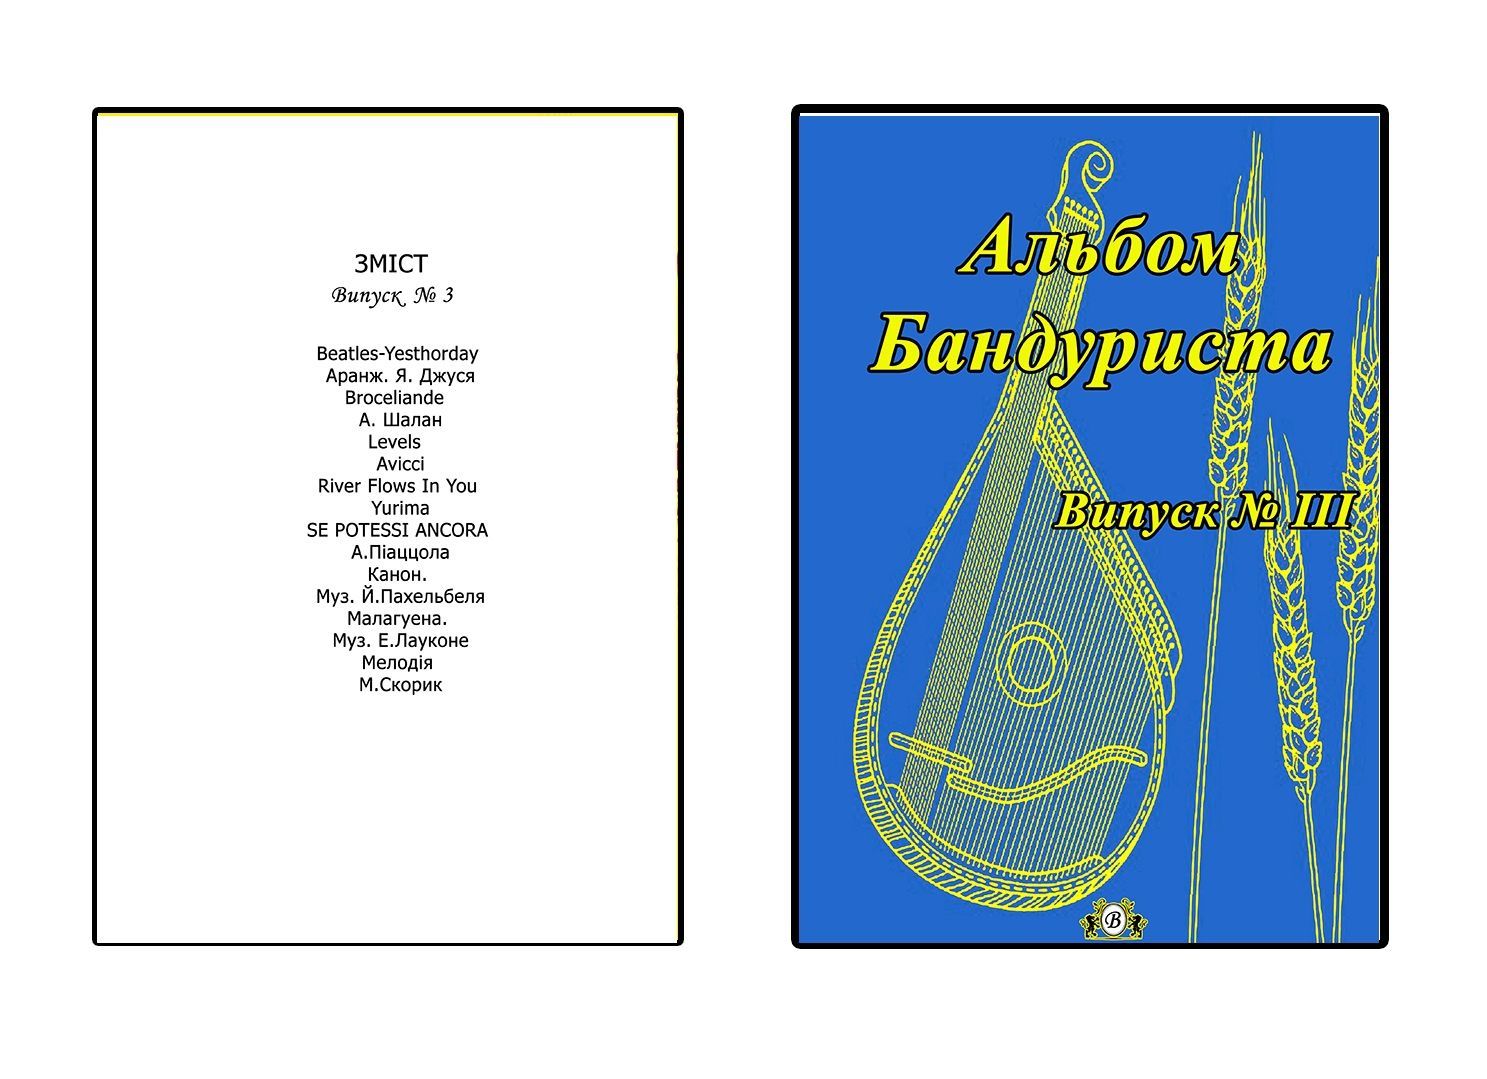 Ноти для Бандури
Альбом Бандуриста
1-2-3-4-5-6-7 выпуск. 
Для виклада